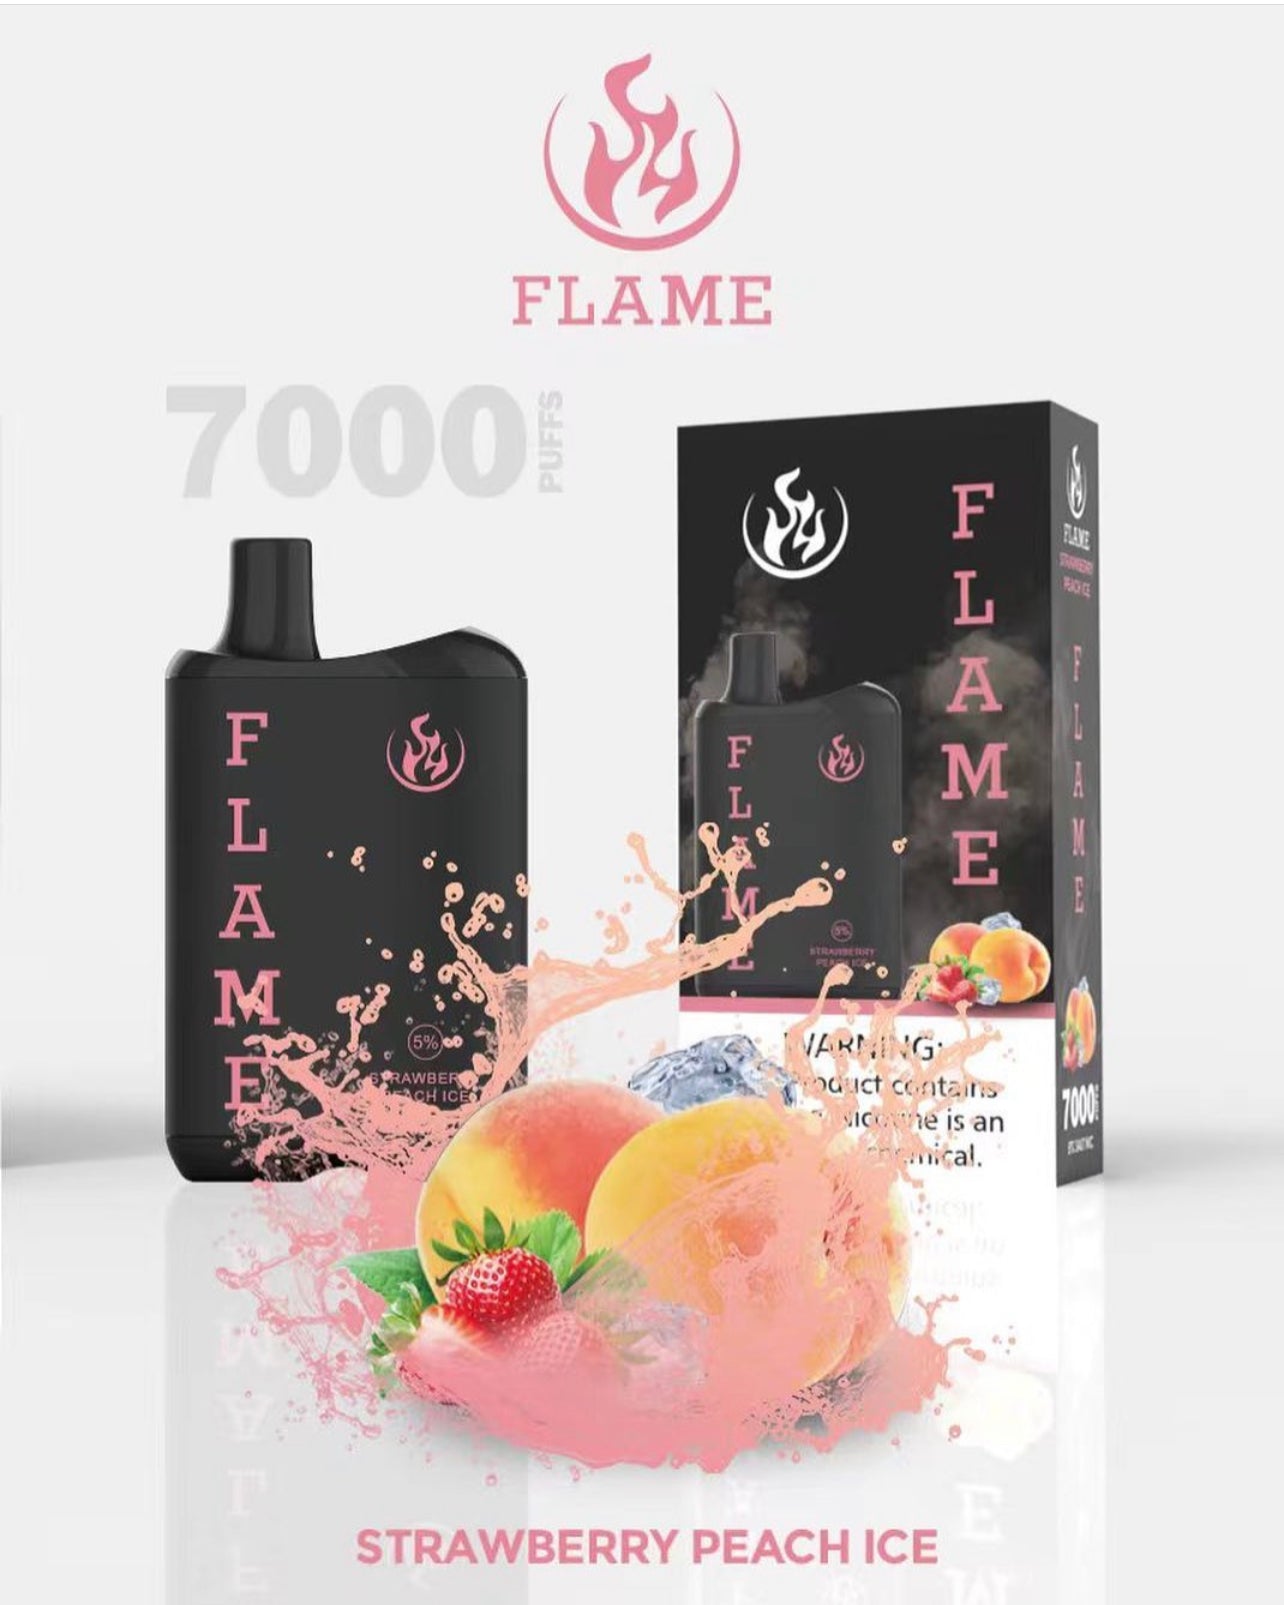 Flame strawberry peach ice